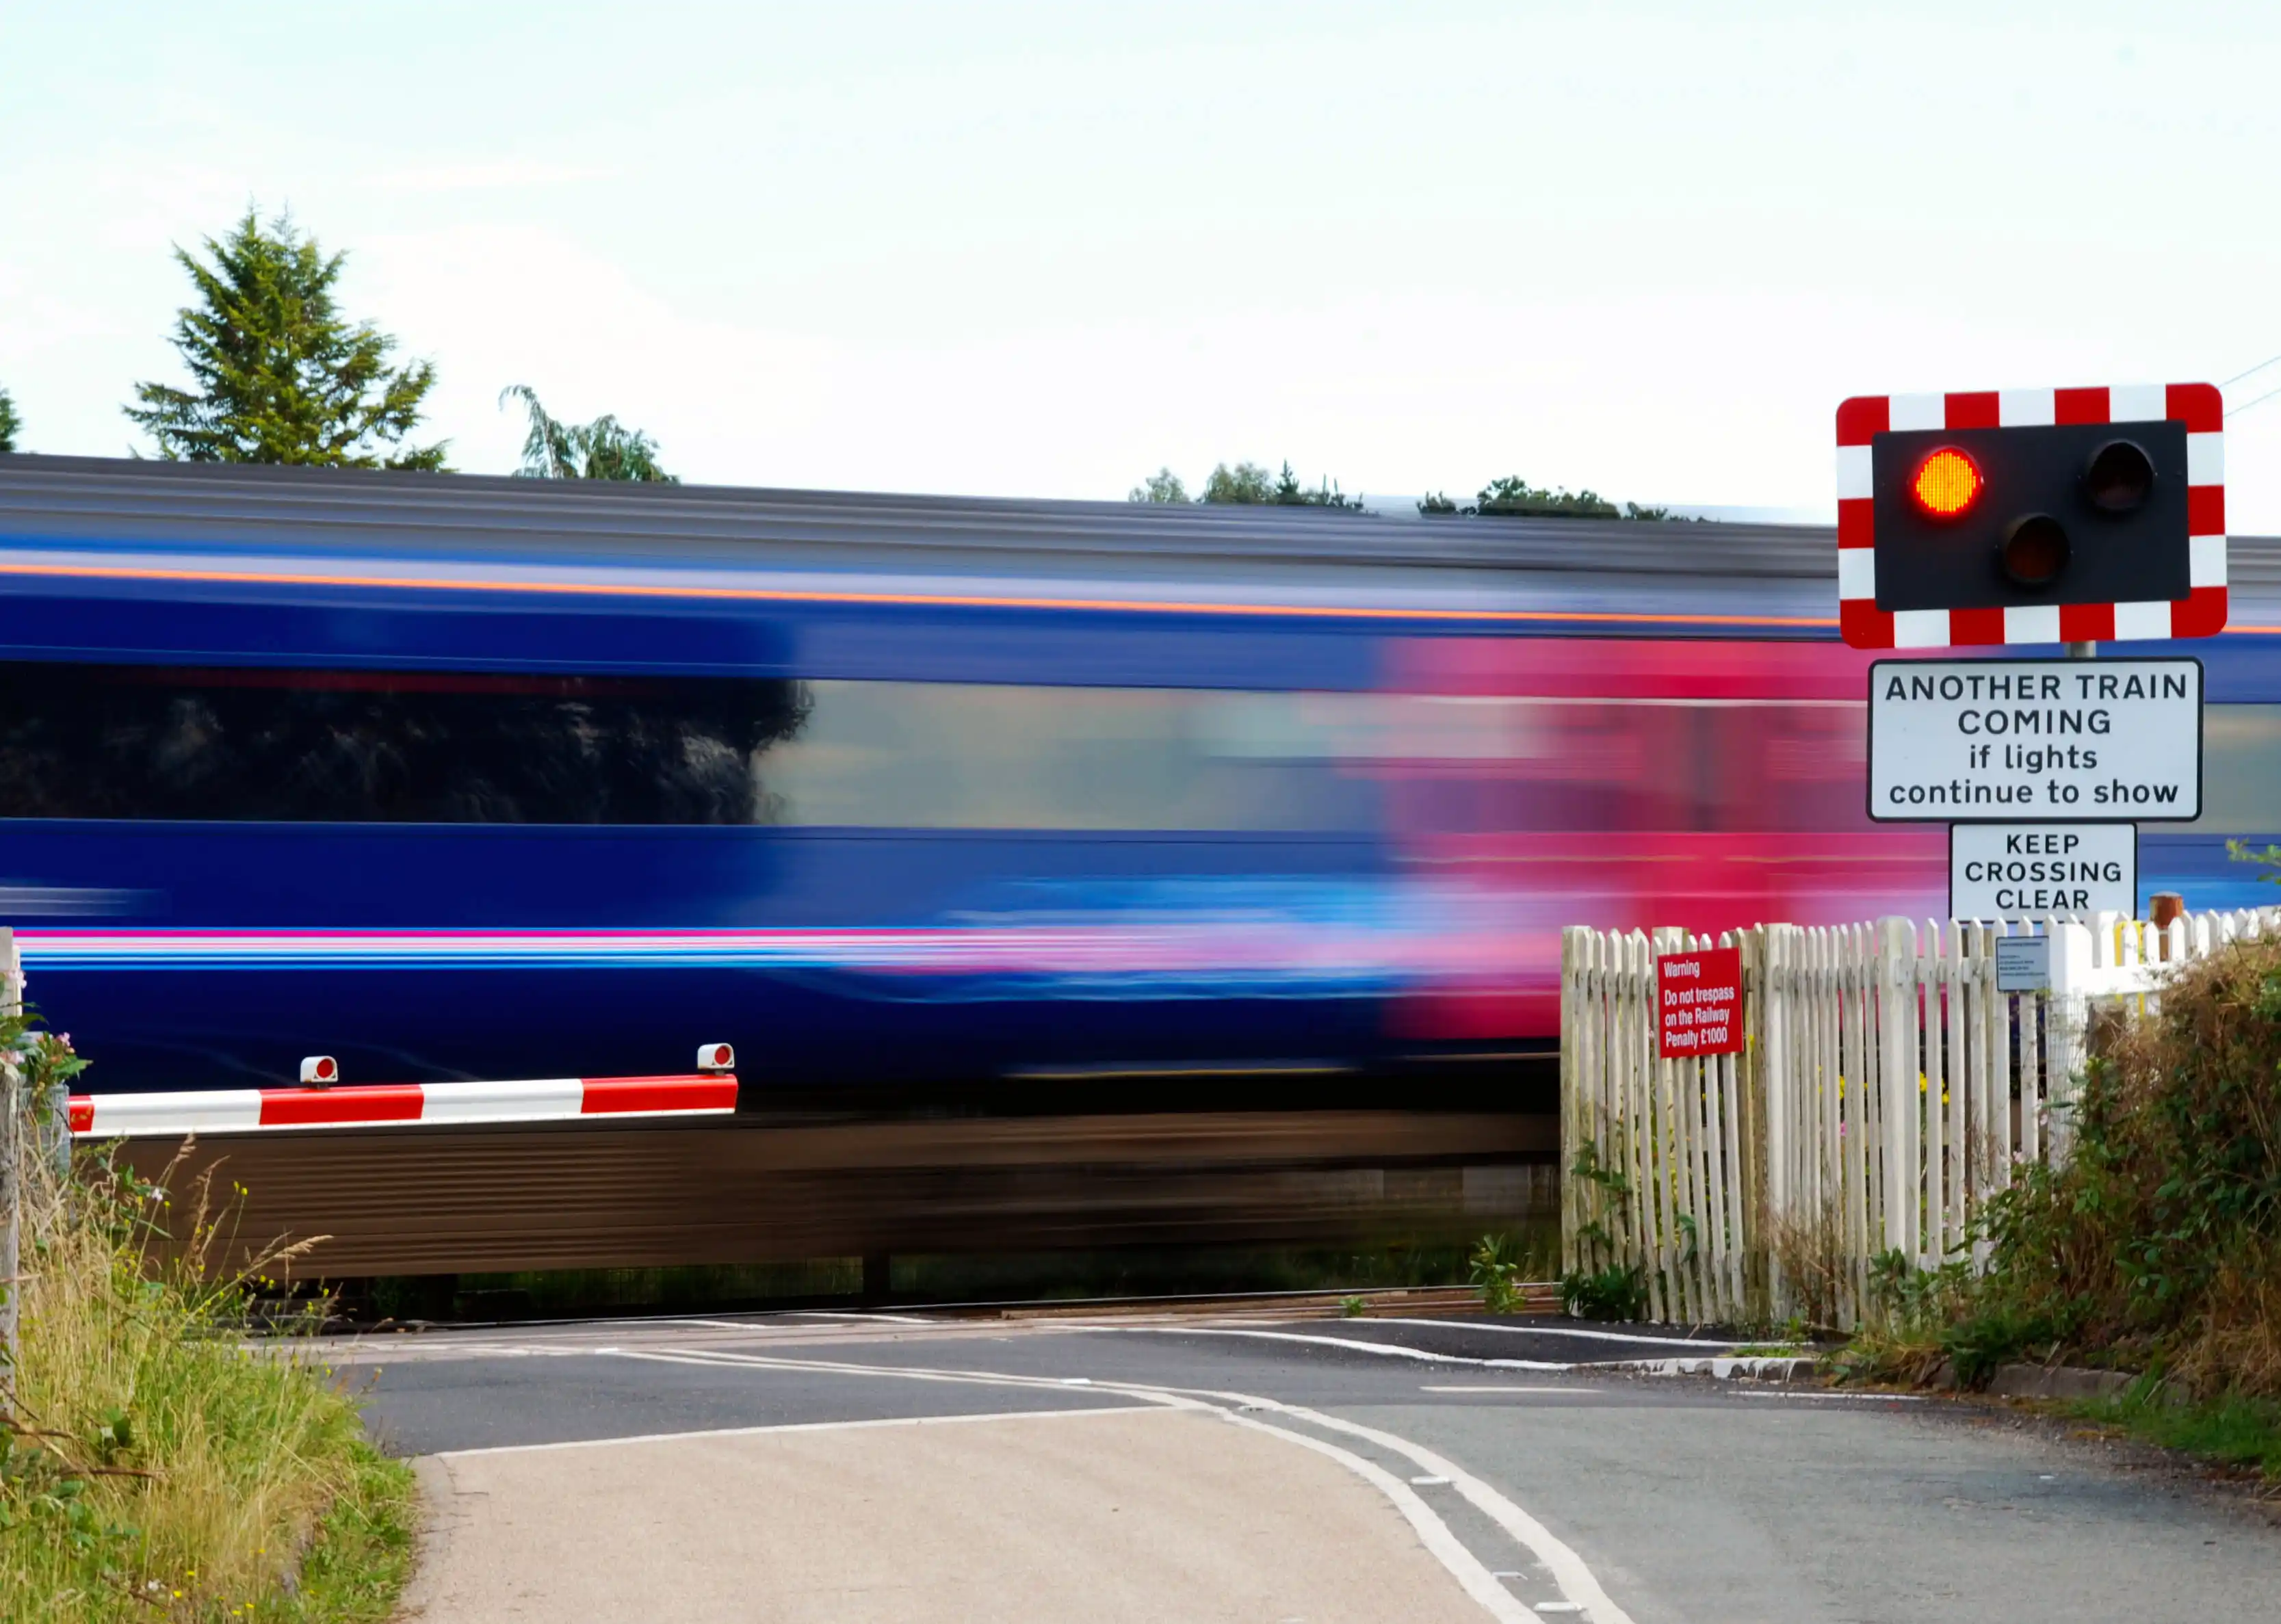 Train speeding over the railway tracks